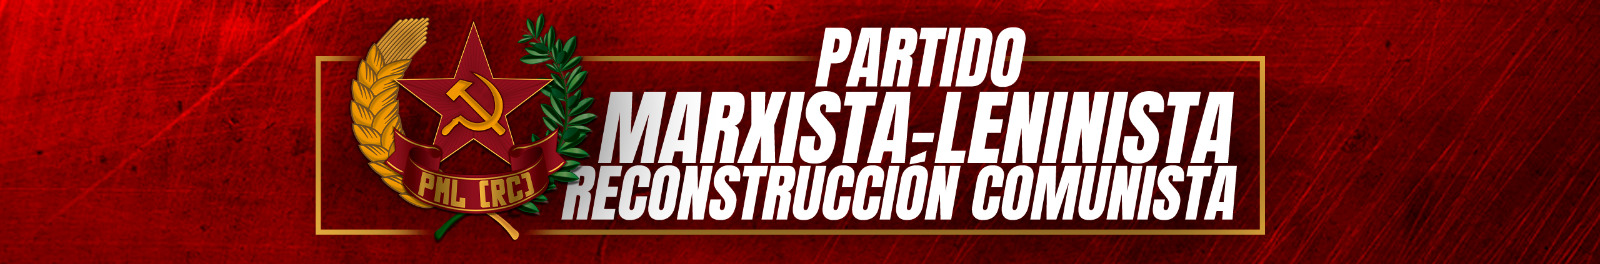 Partido Marxista-Leninista (Reconstrucción comunista)